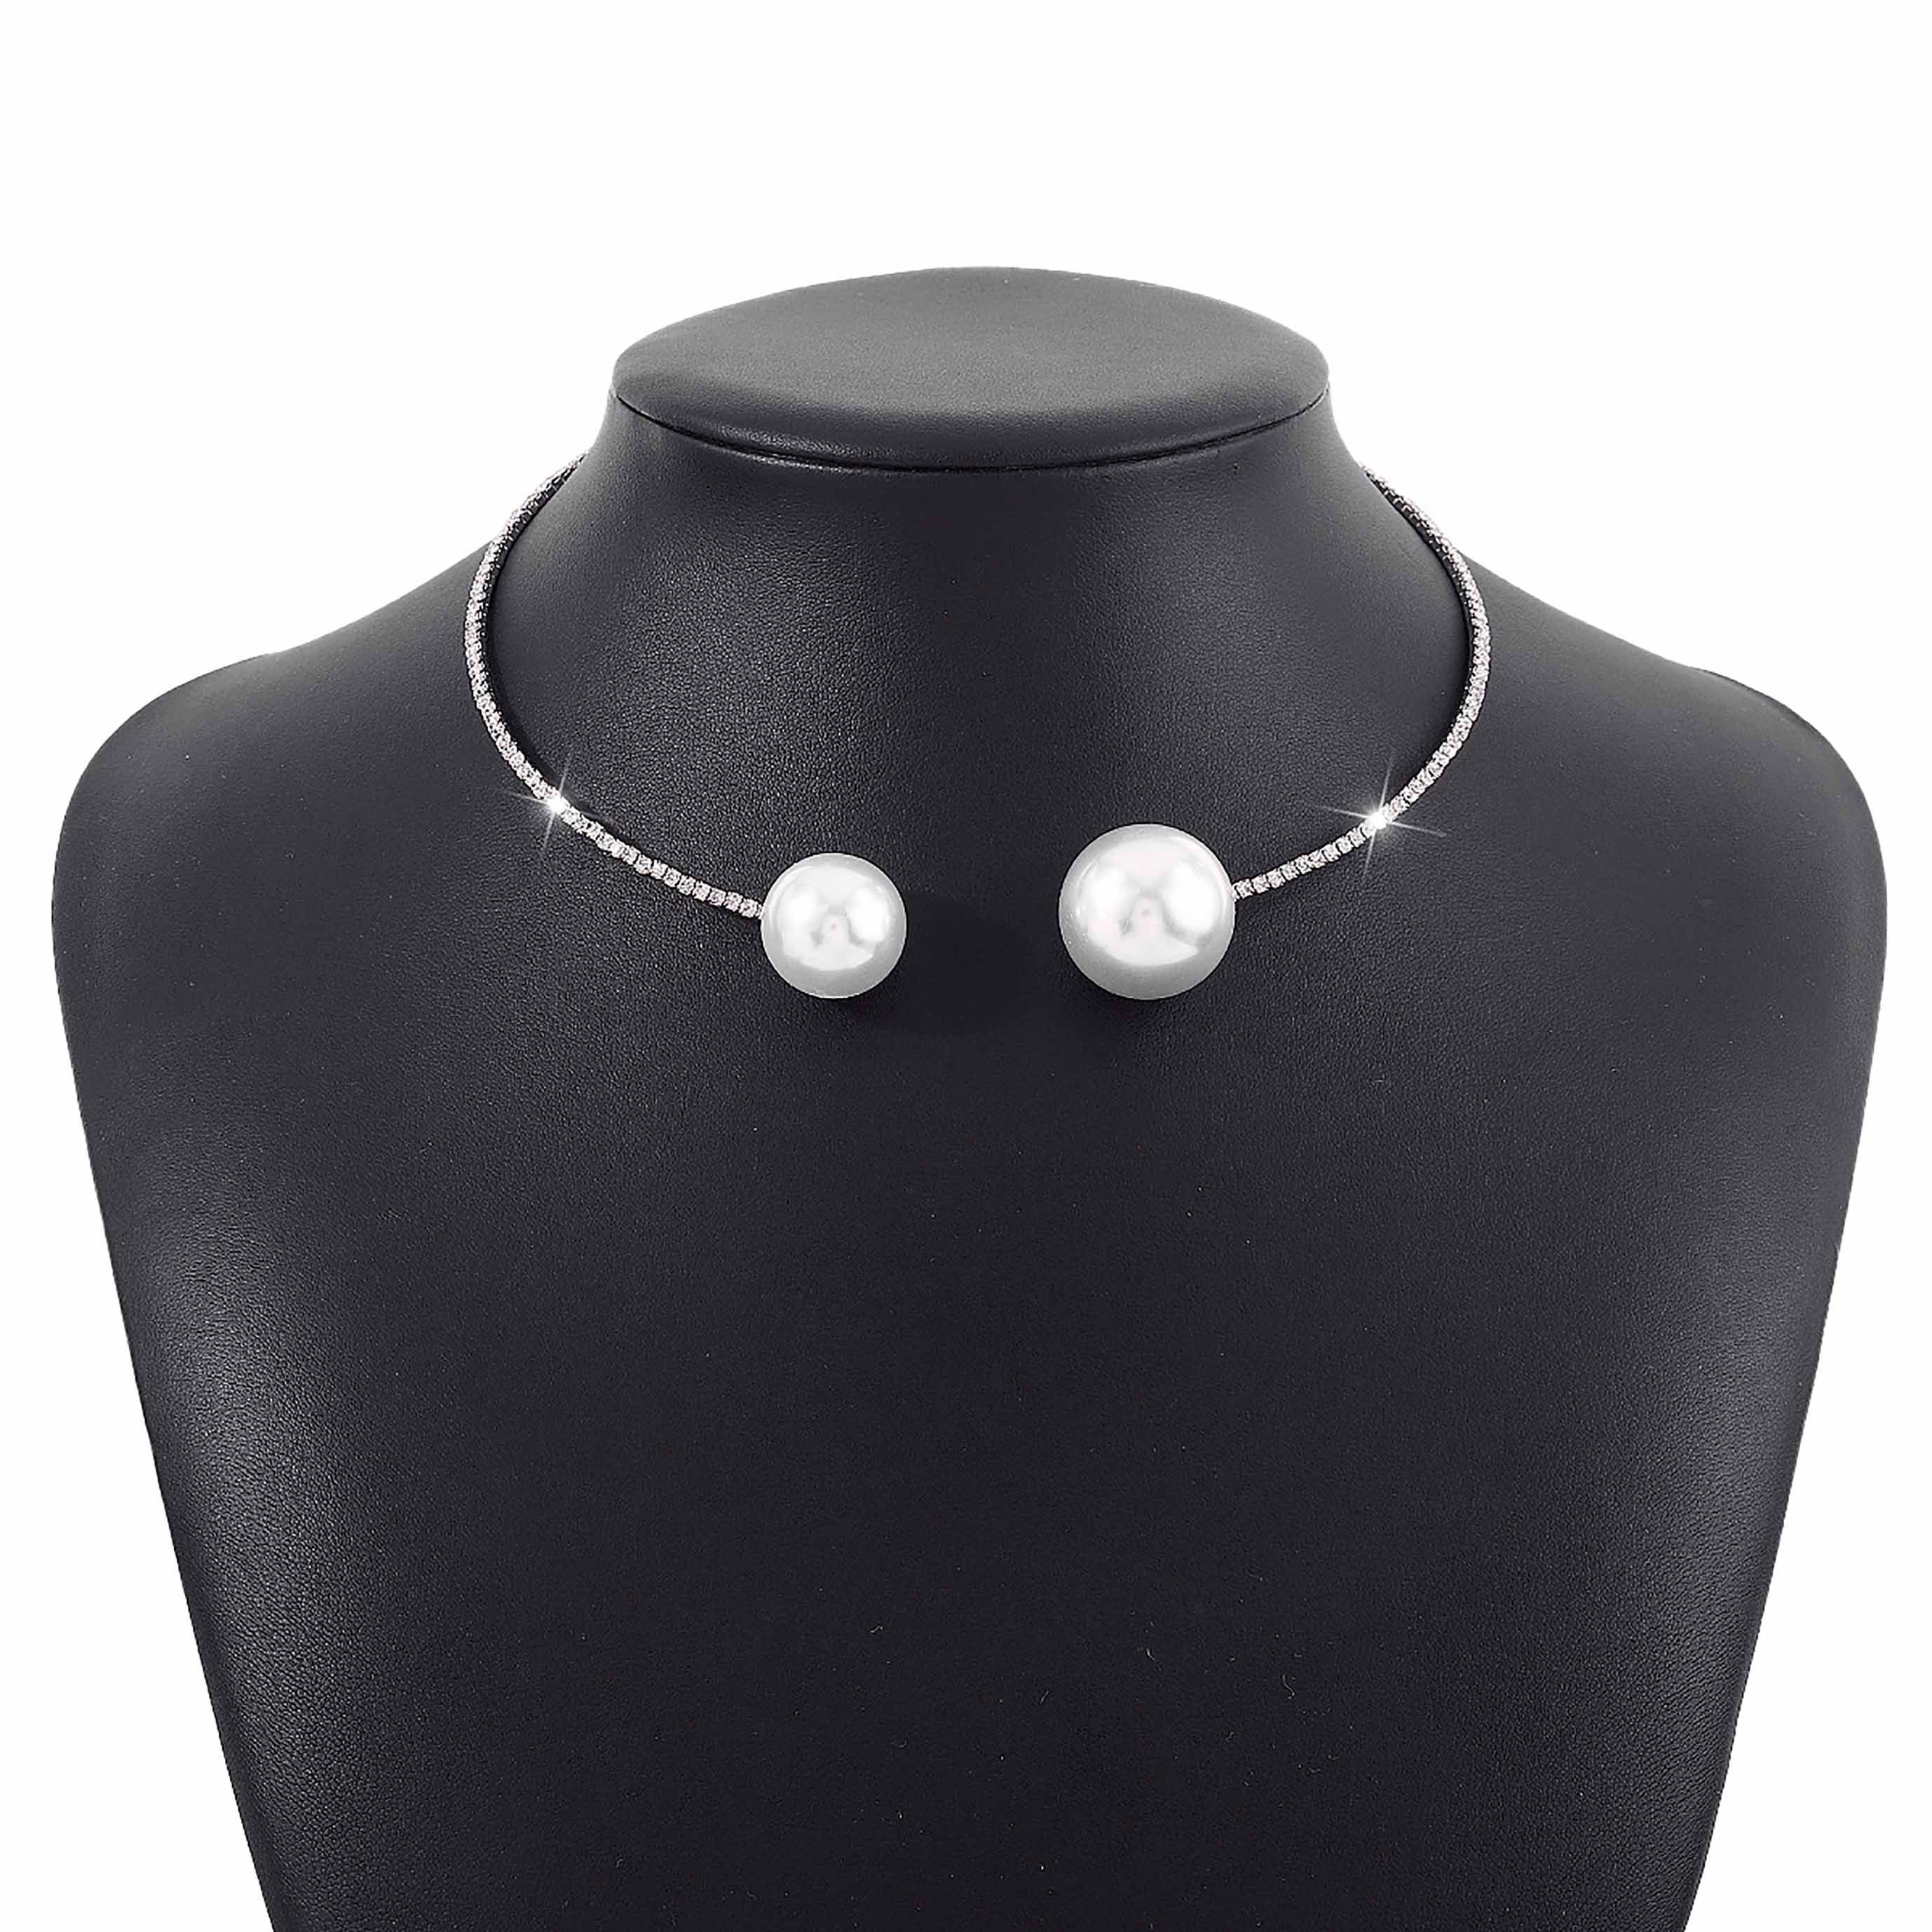 SRRINM Choker Kreative offene Perlenkette für Frauen